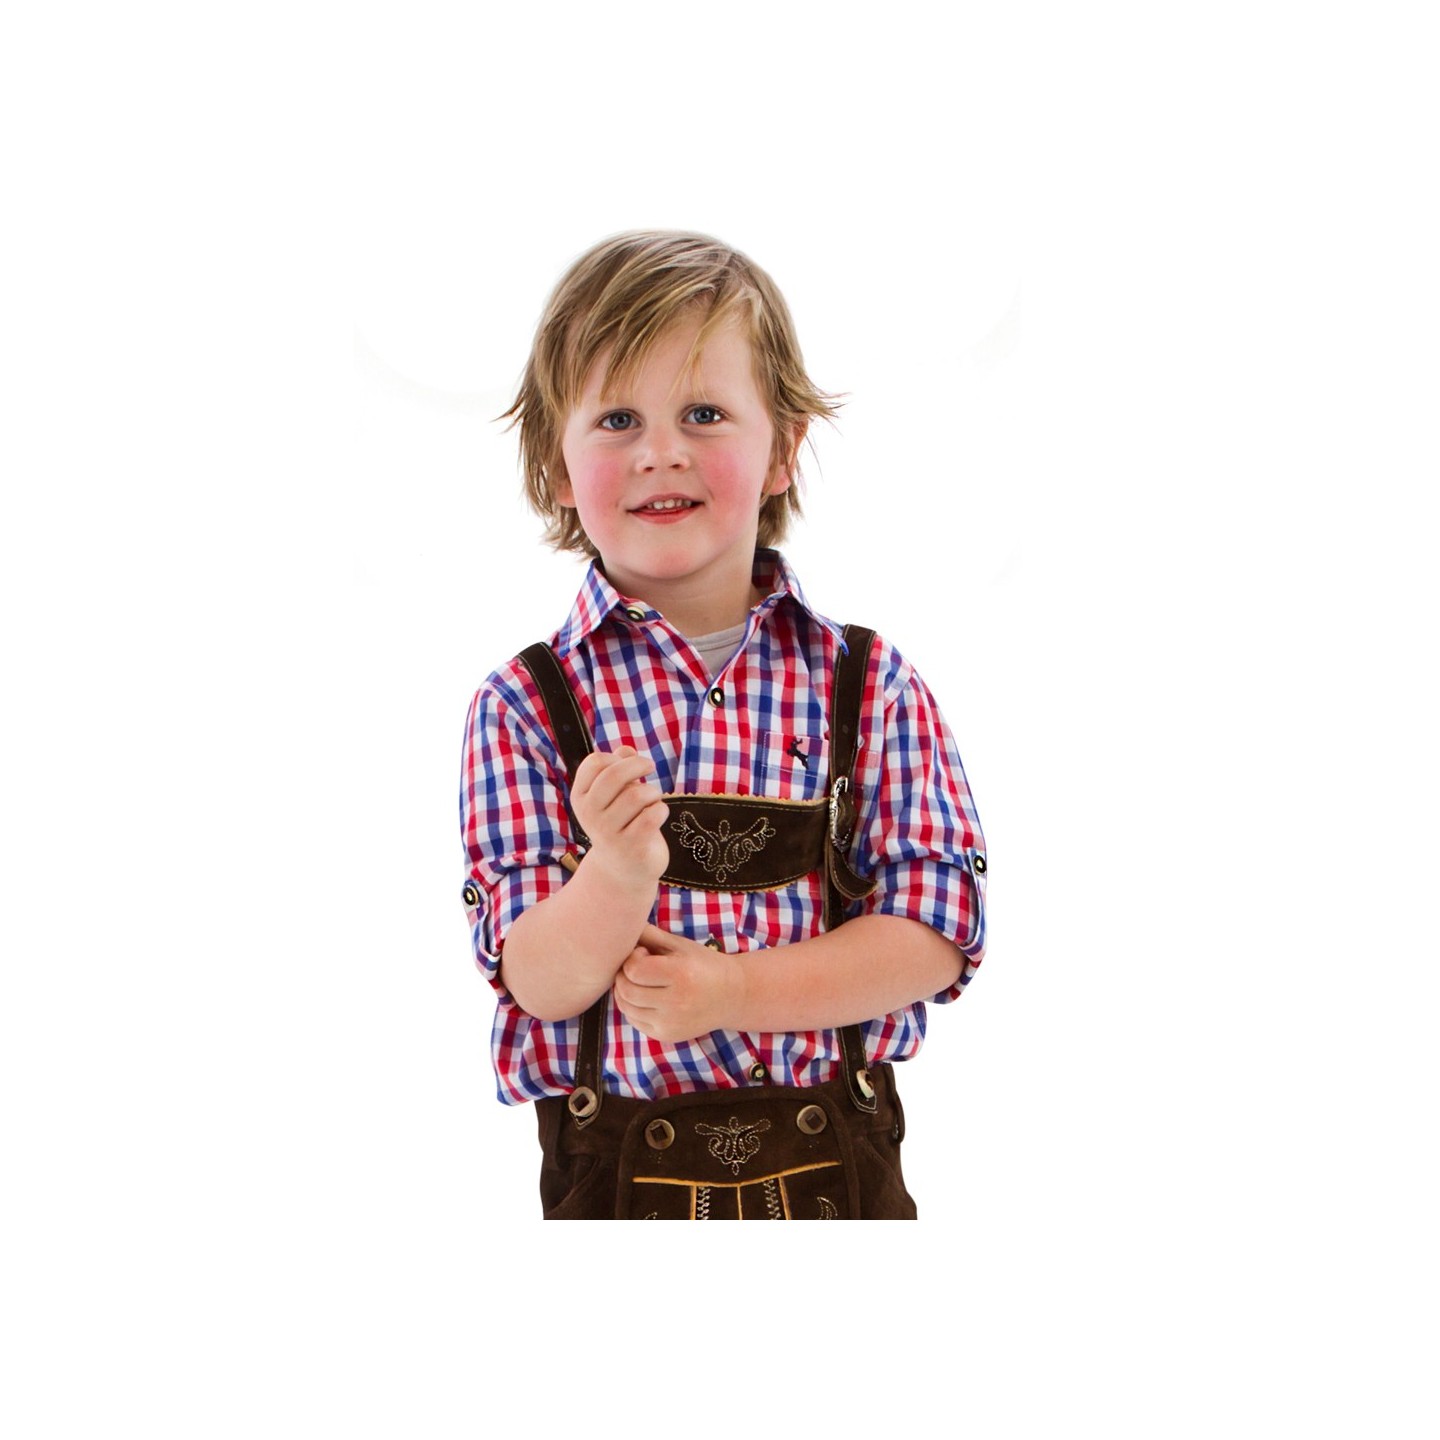 Tiroler hemd kind geruit oktoberfest kleding